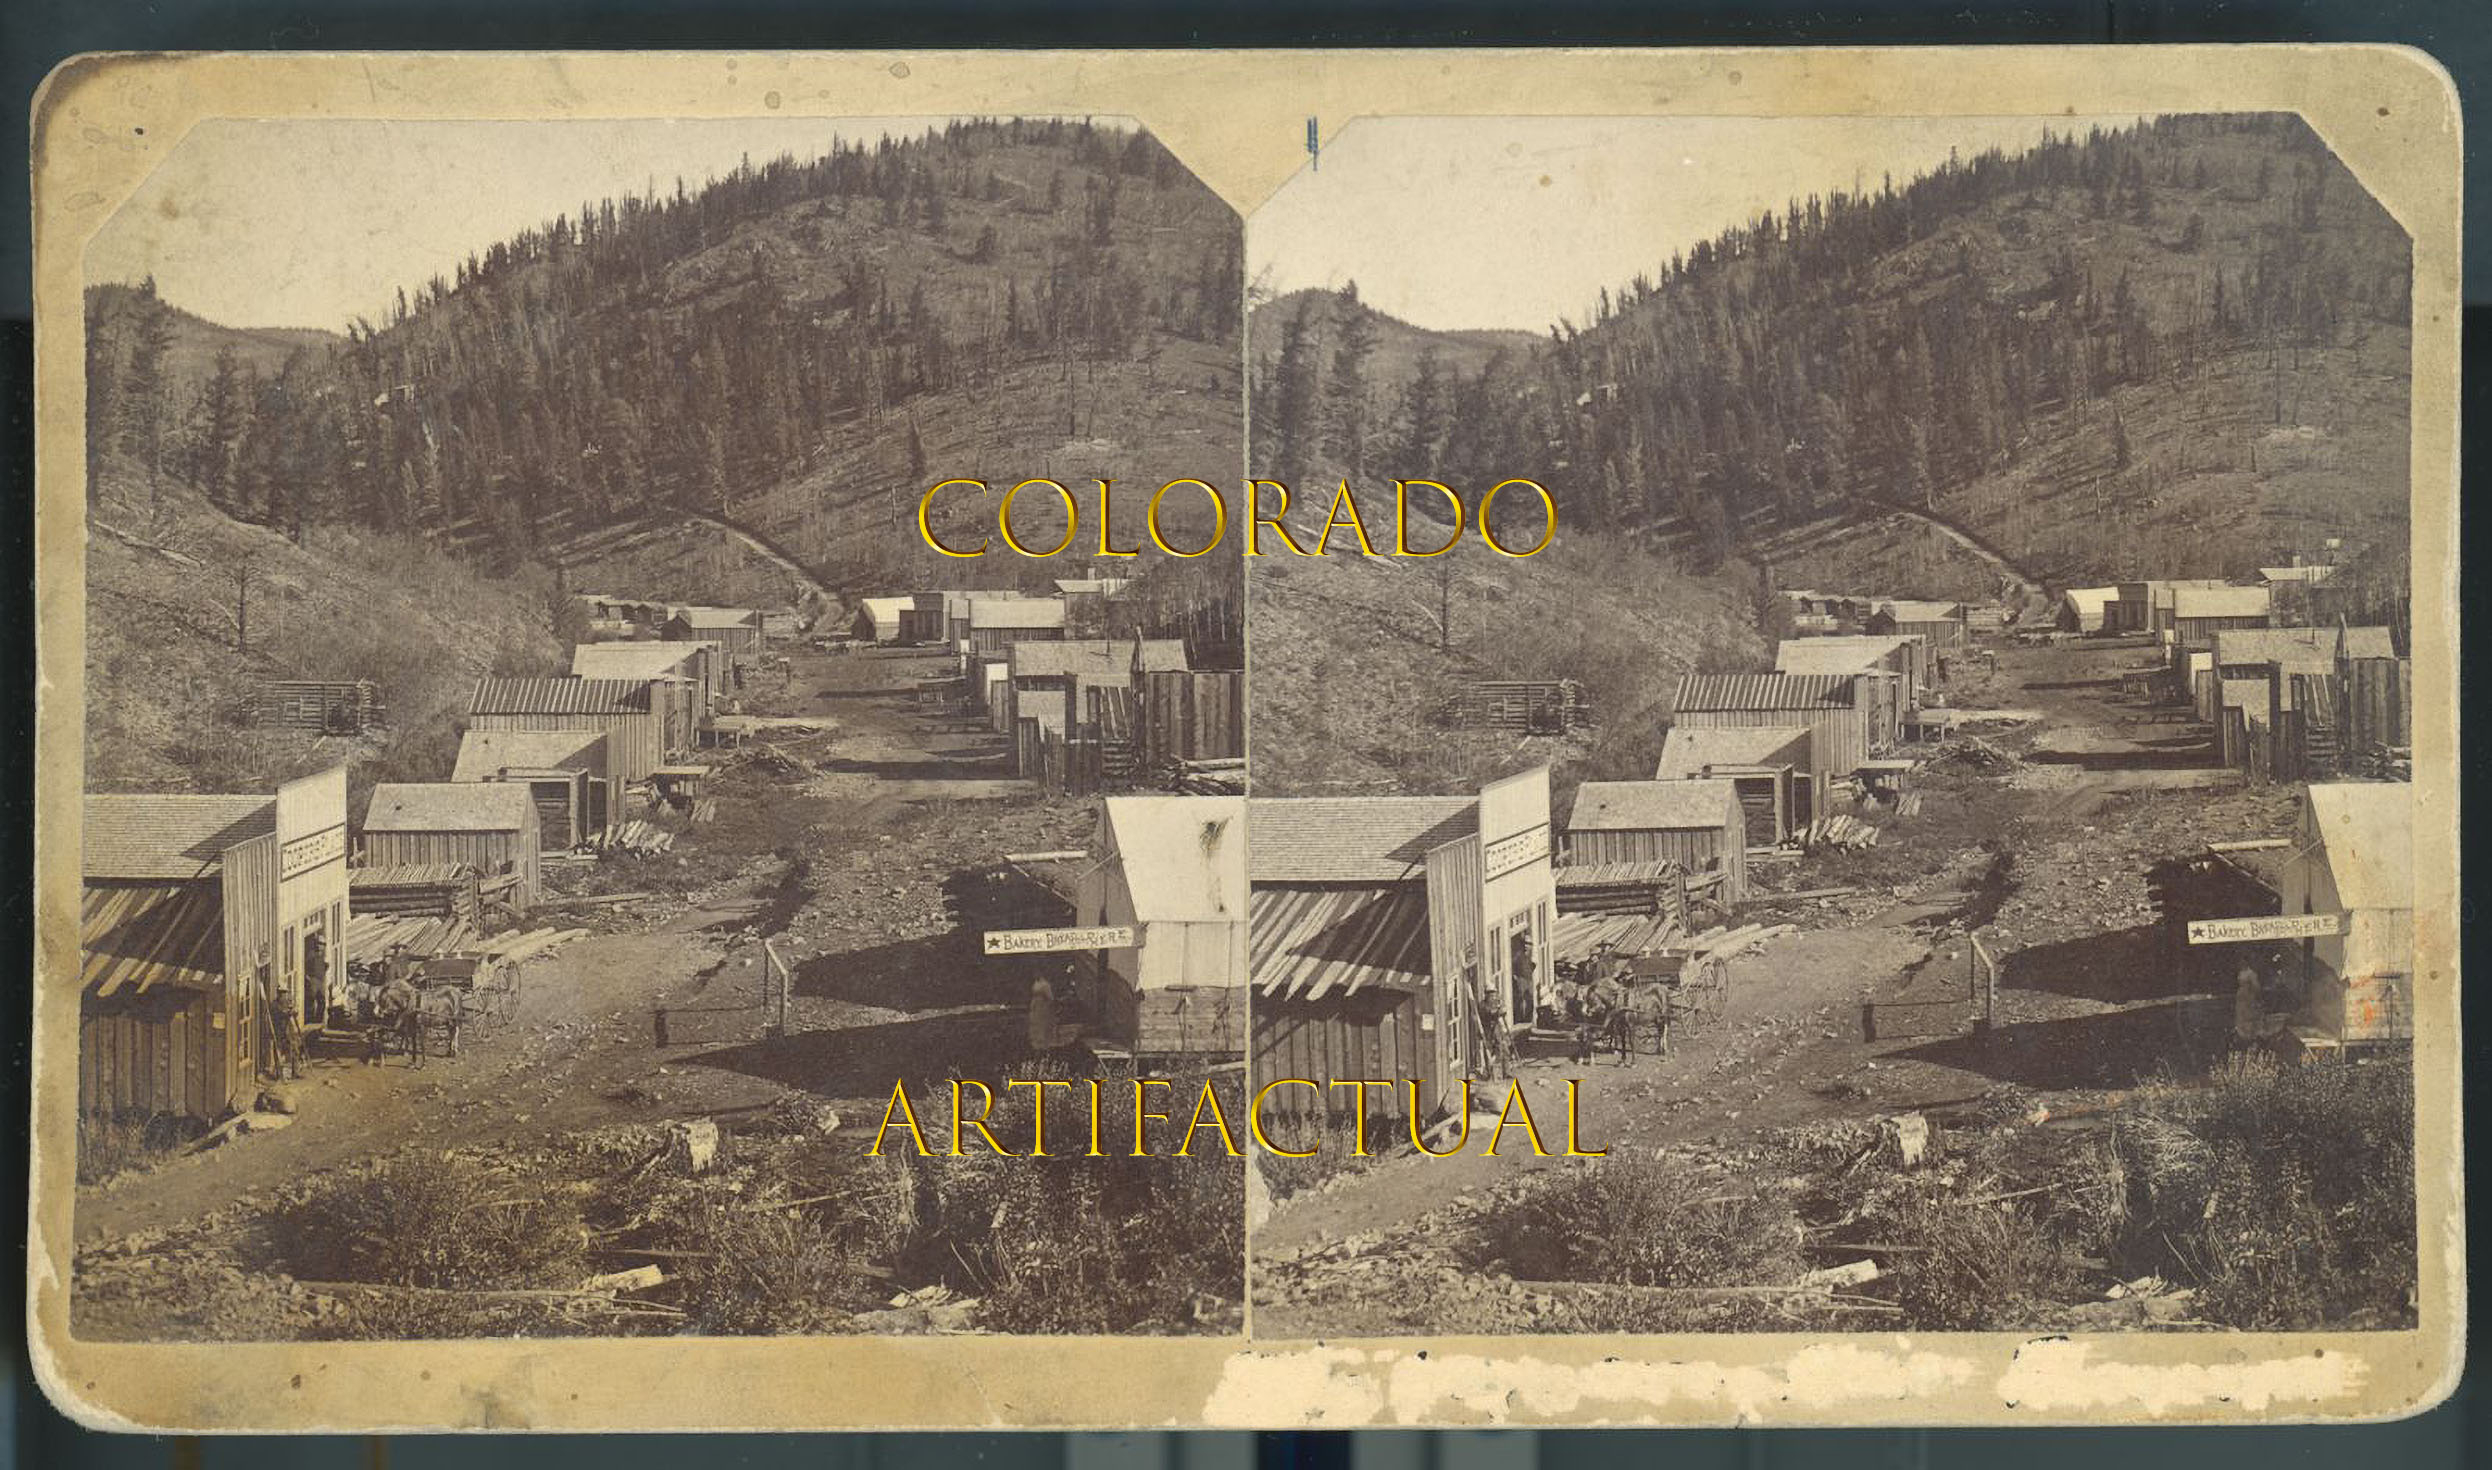 Exchequer Bonanza Mining District Saquache County Colorado stereoview photograph Charles Goodman 1881